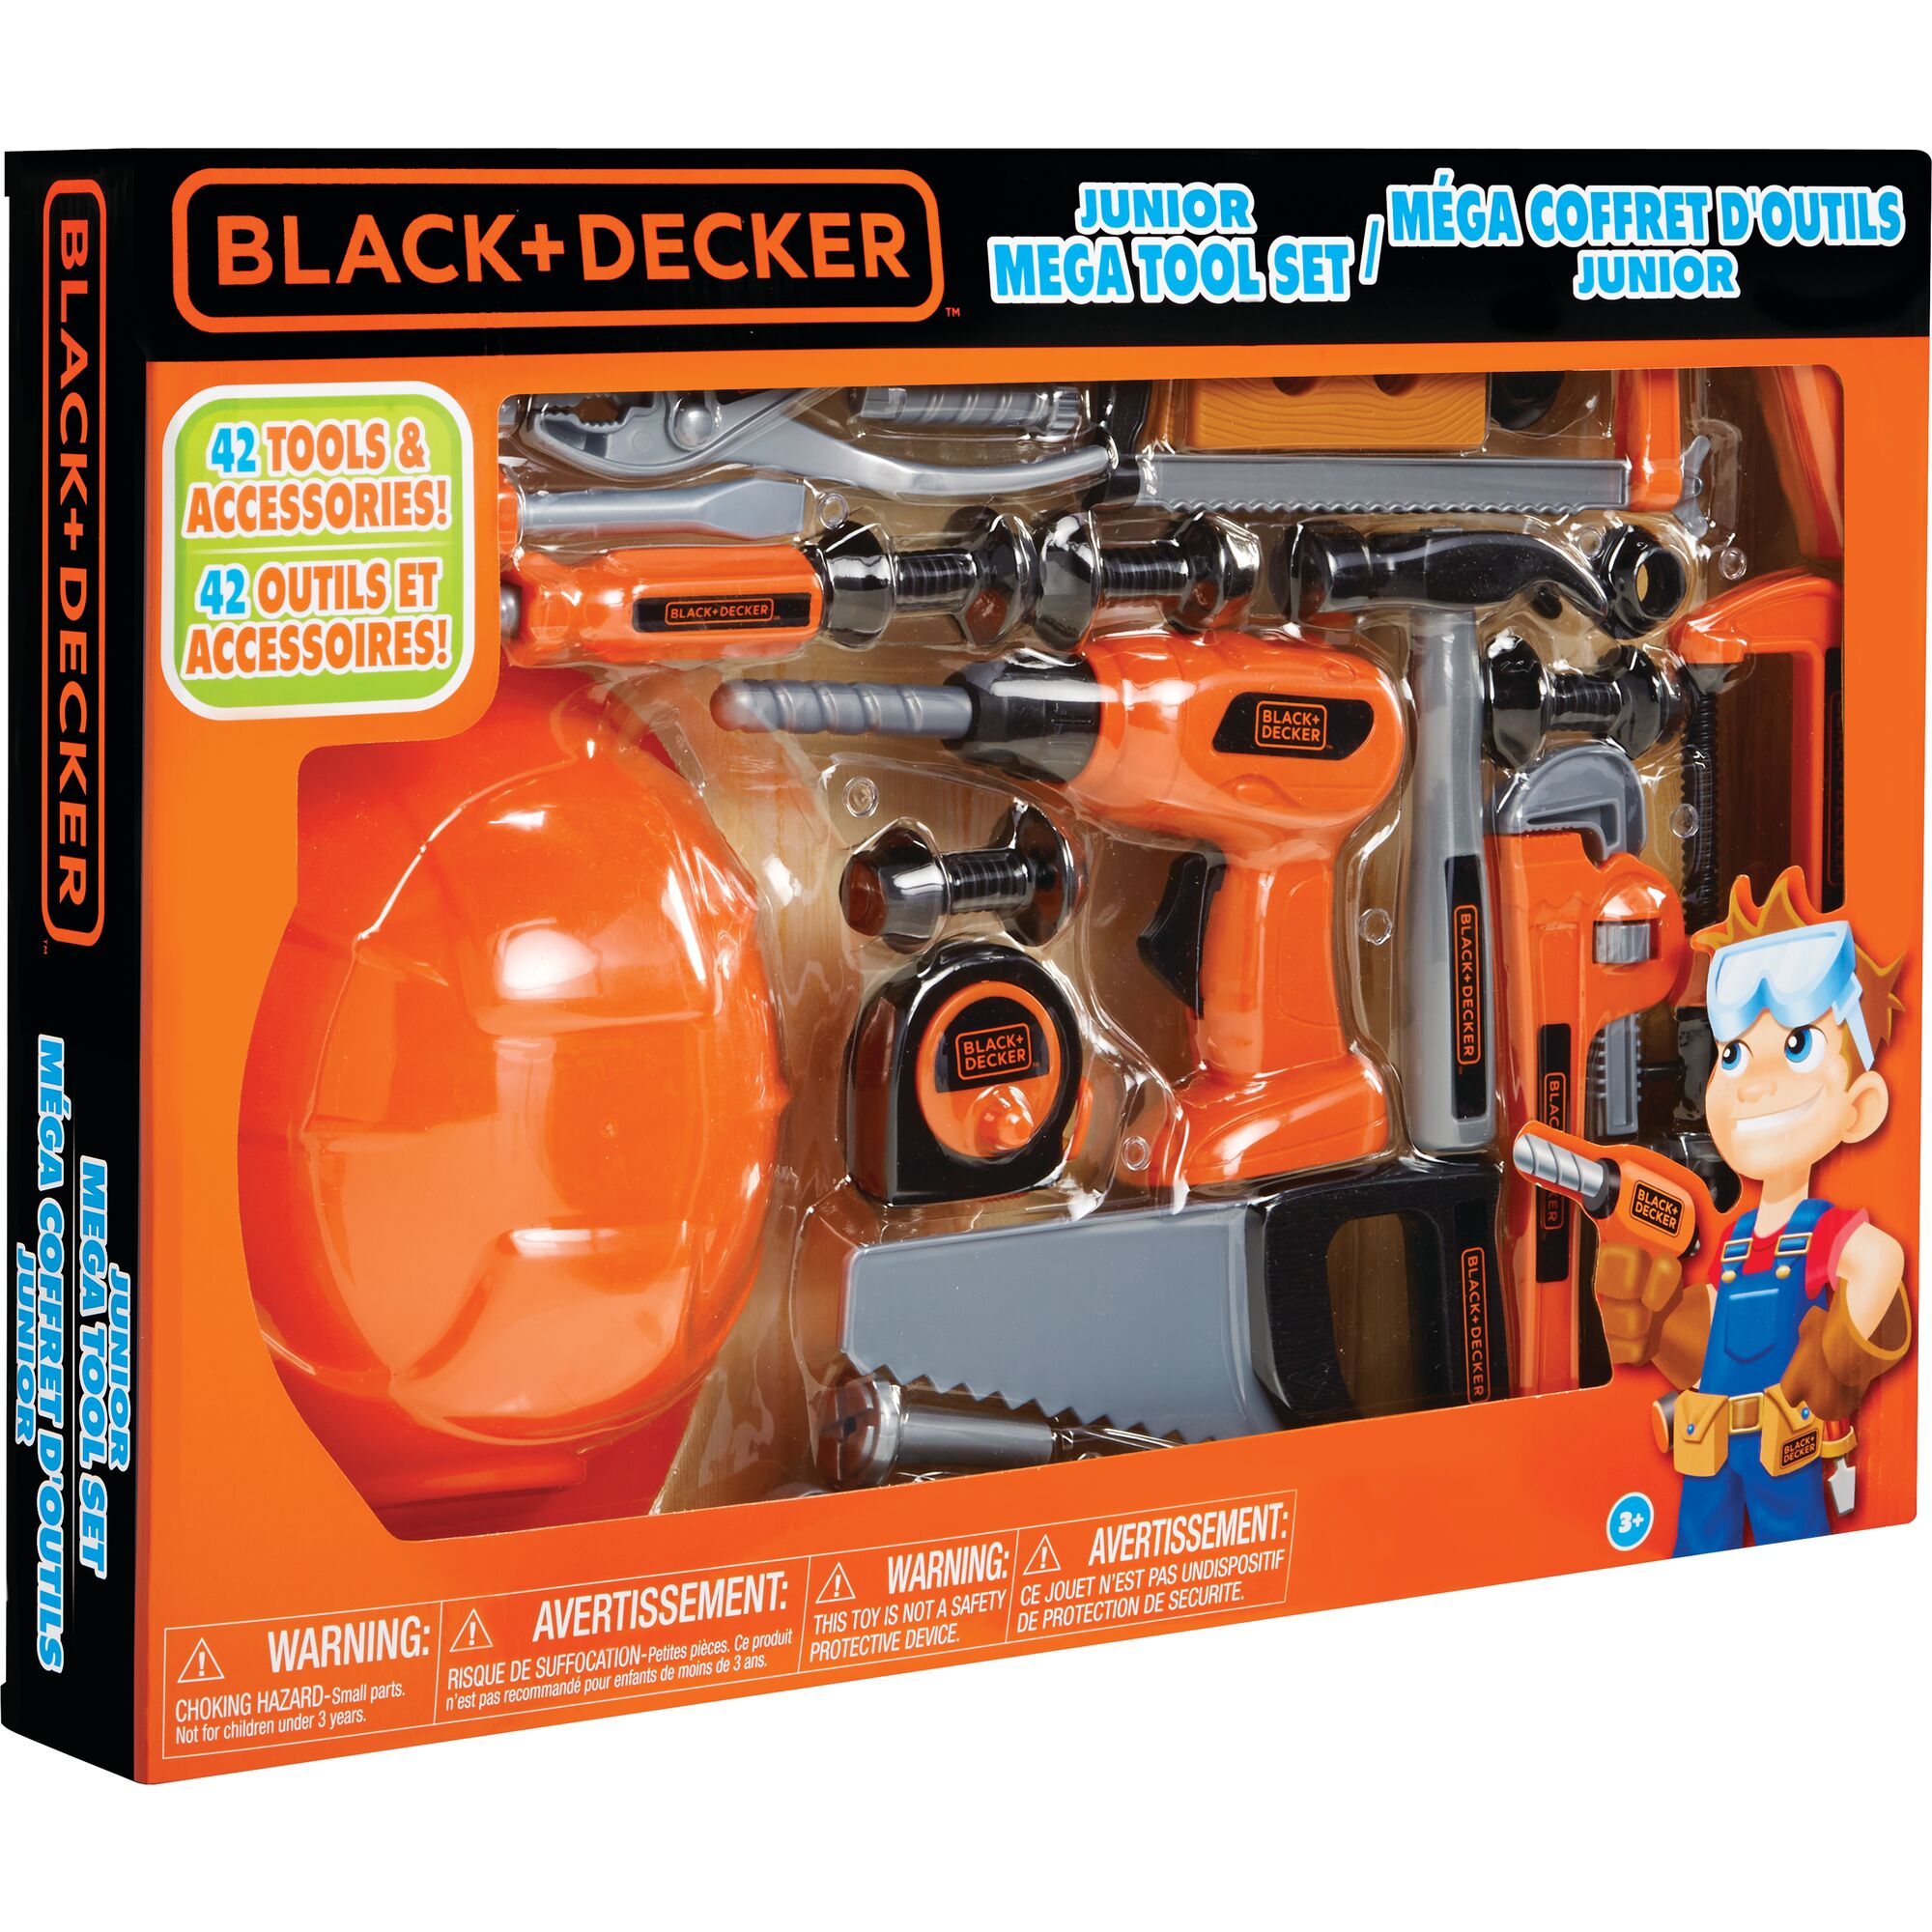 Black & Decker Power N' Play Workbench Kids Tool 52pcs Set Toys